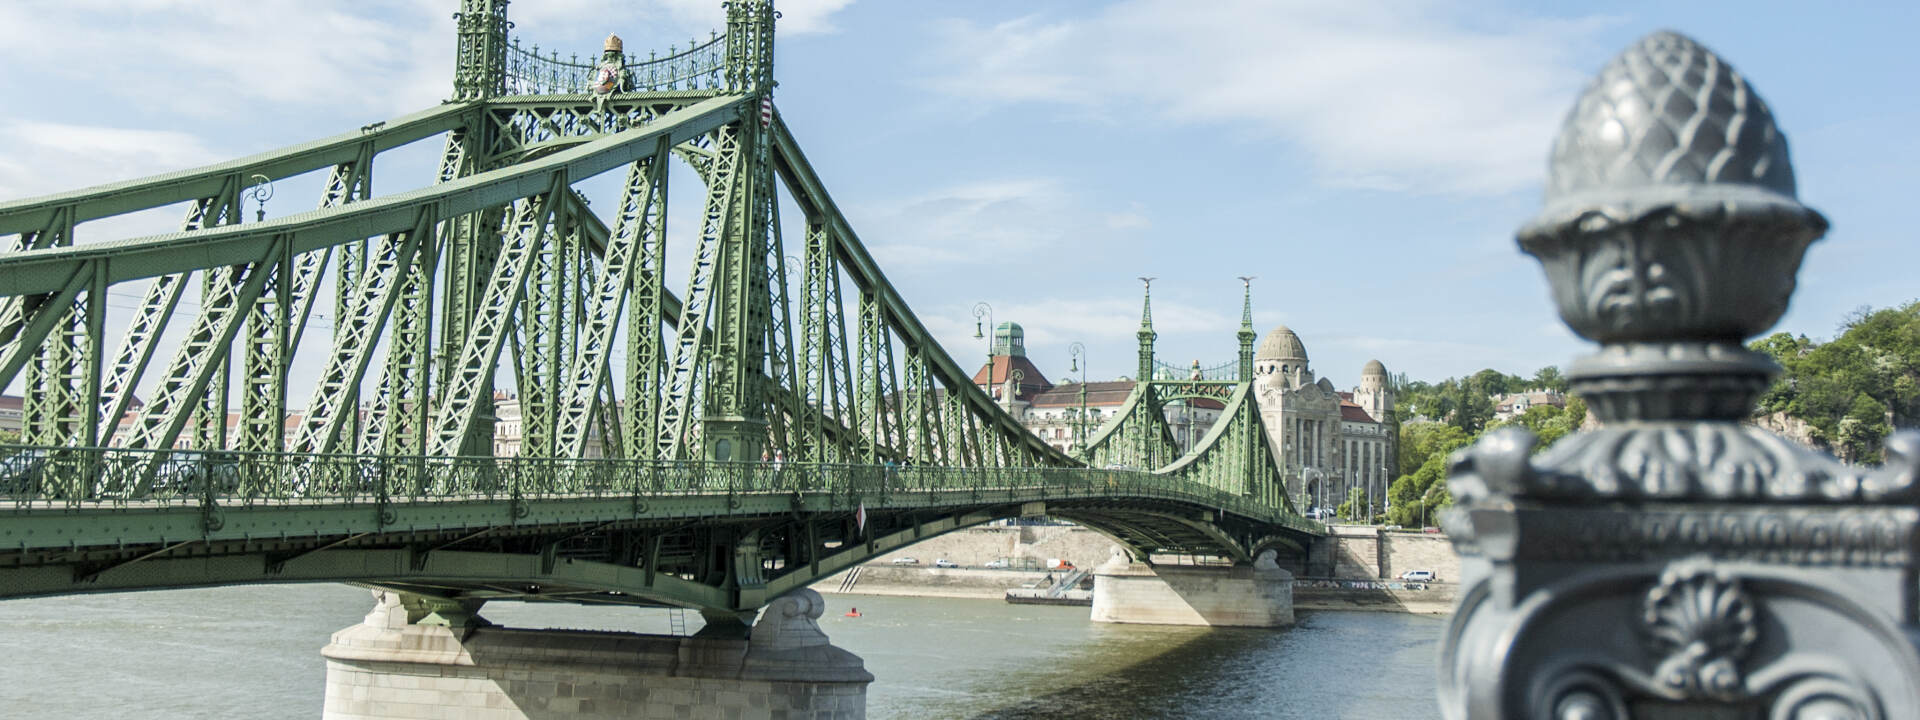 Budapest - Szabadság Bridge © budapestinfo.hu